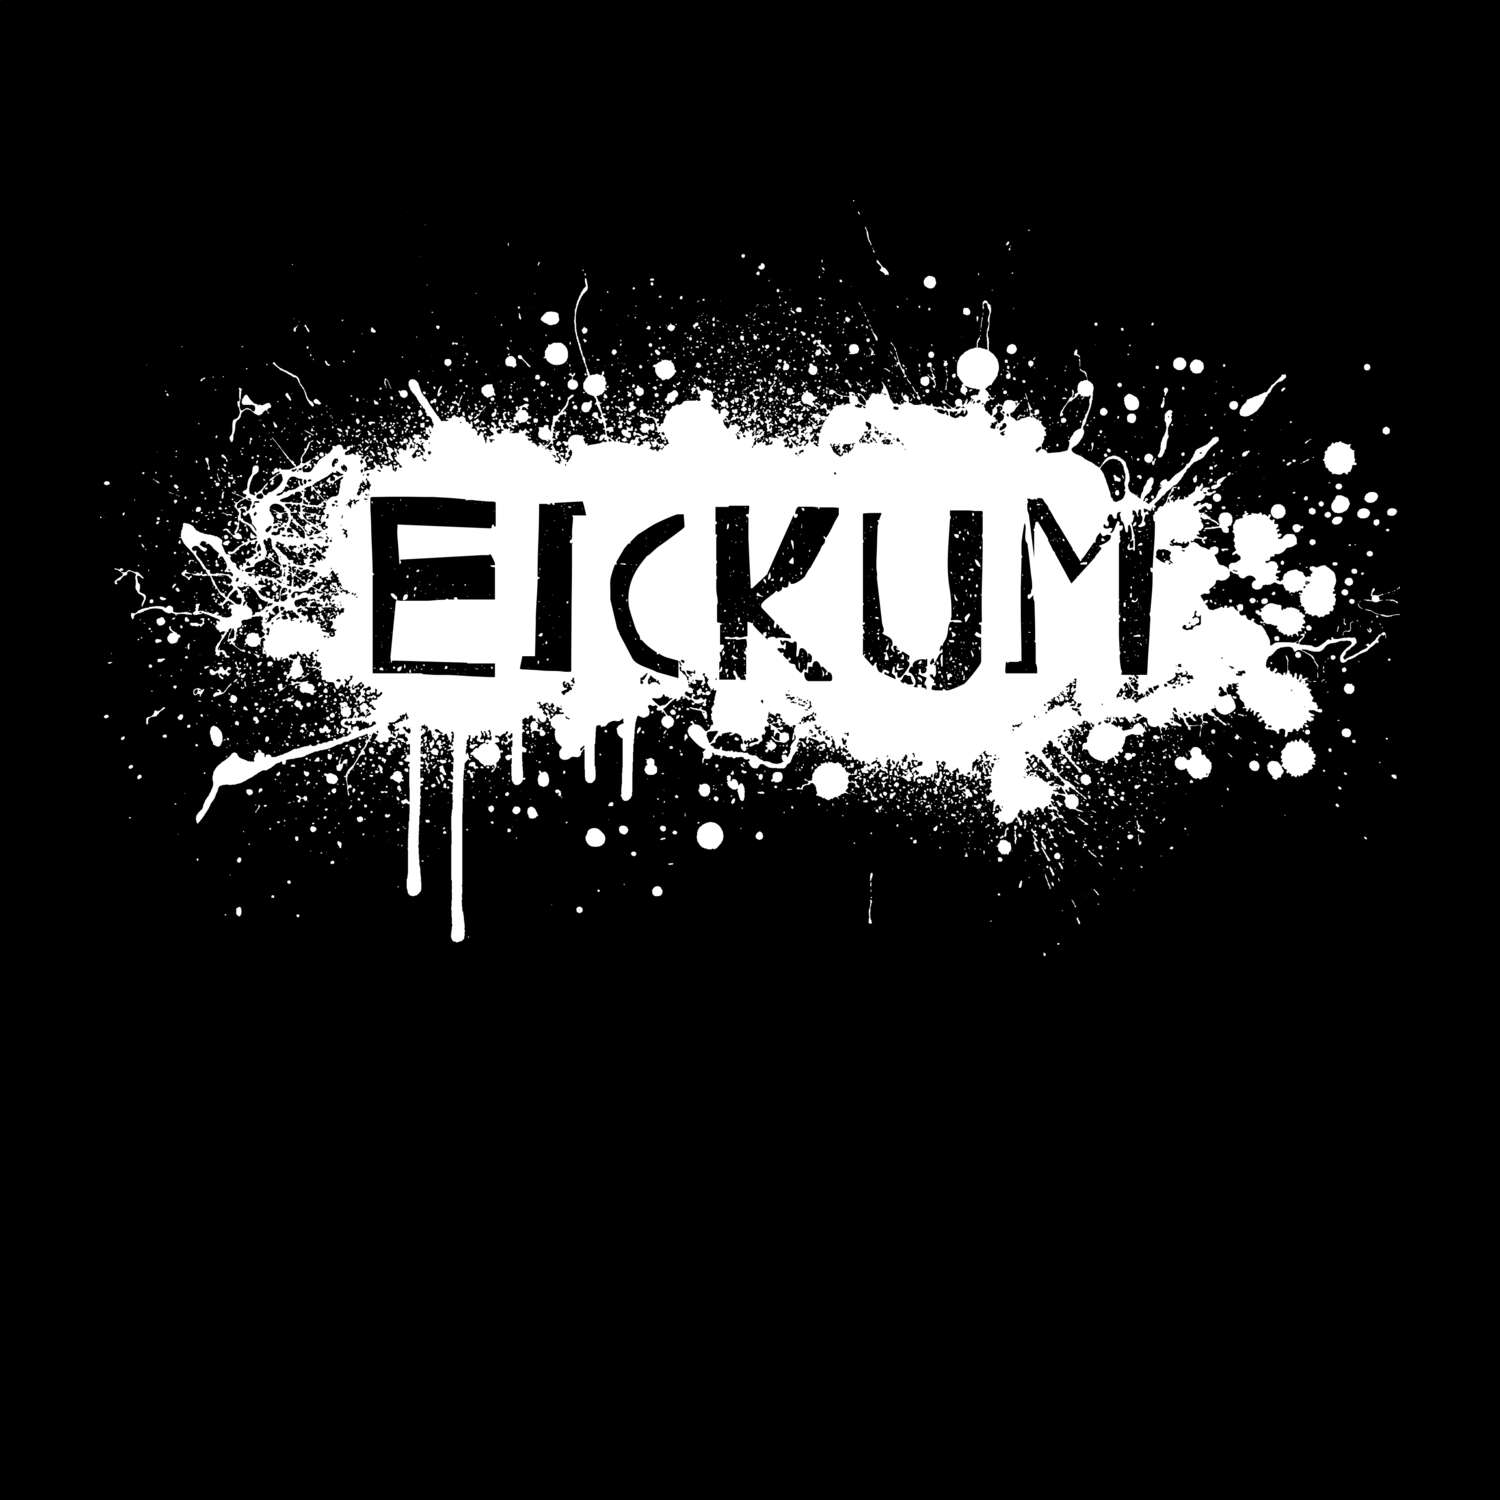 Eickum T-Shirt »Paint Splash Punk«